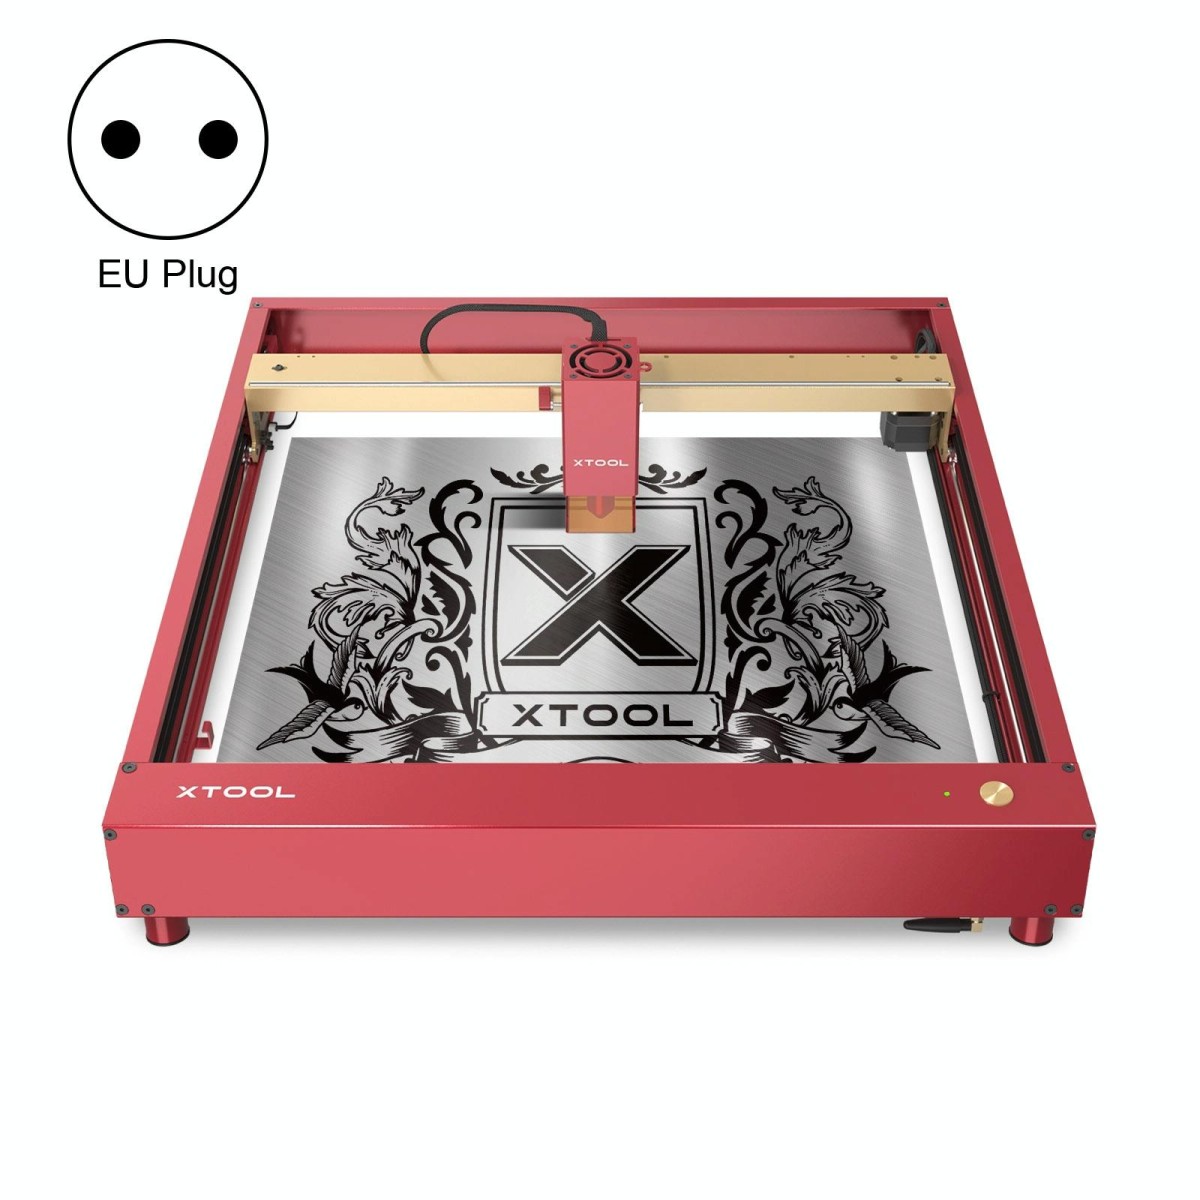 XTOOL D1 Pro-10W High Accuracy DIY Laser Engraving & Cutting Machine, Plug Type:EU Plug(Golden Red)